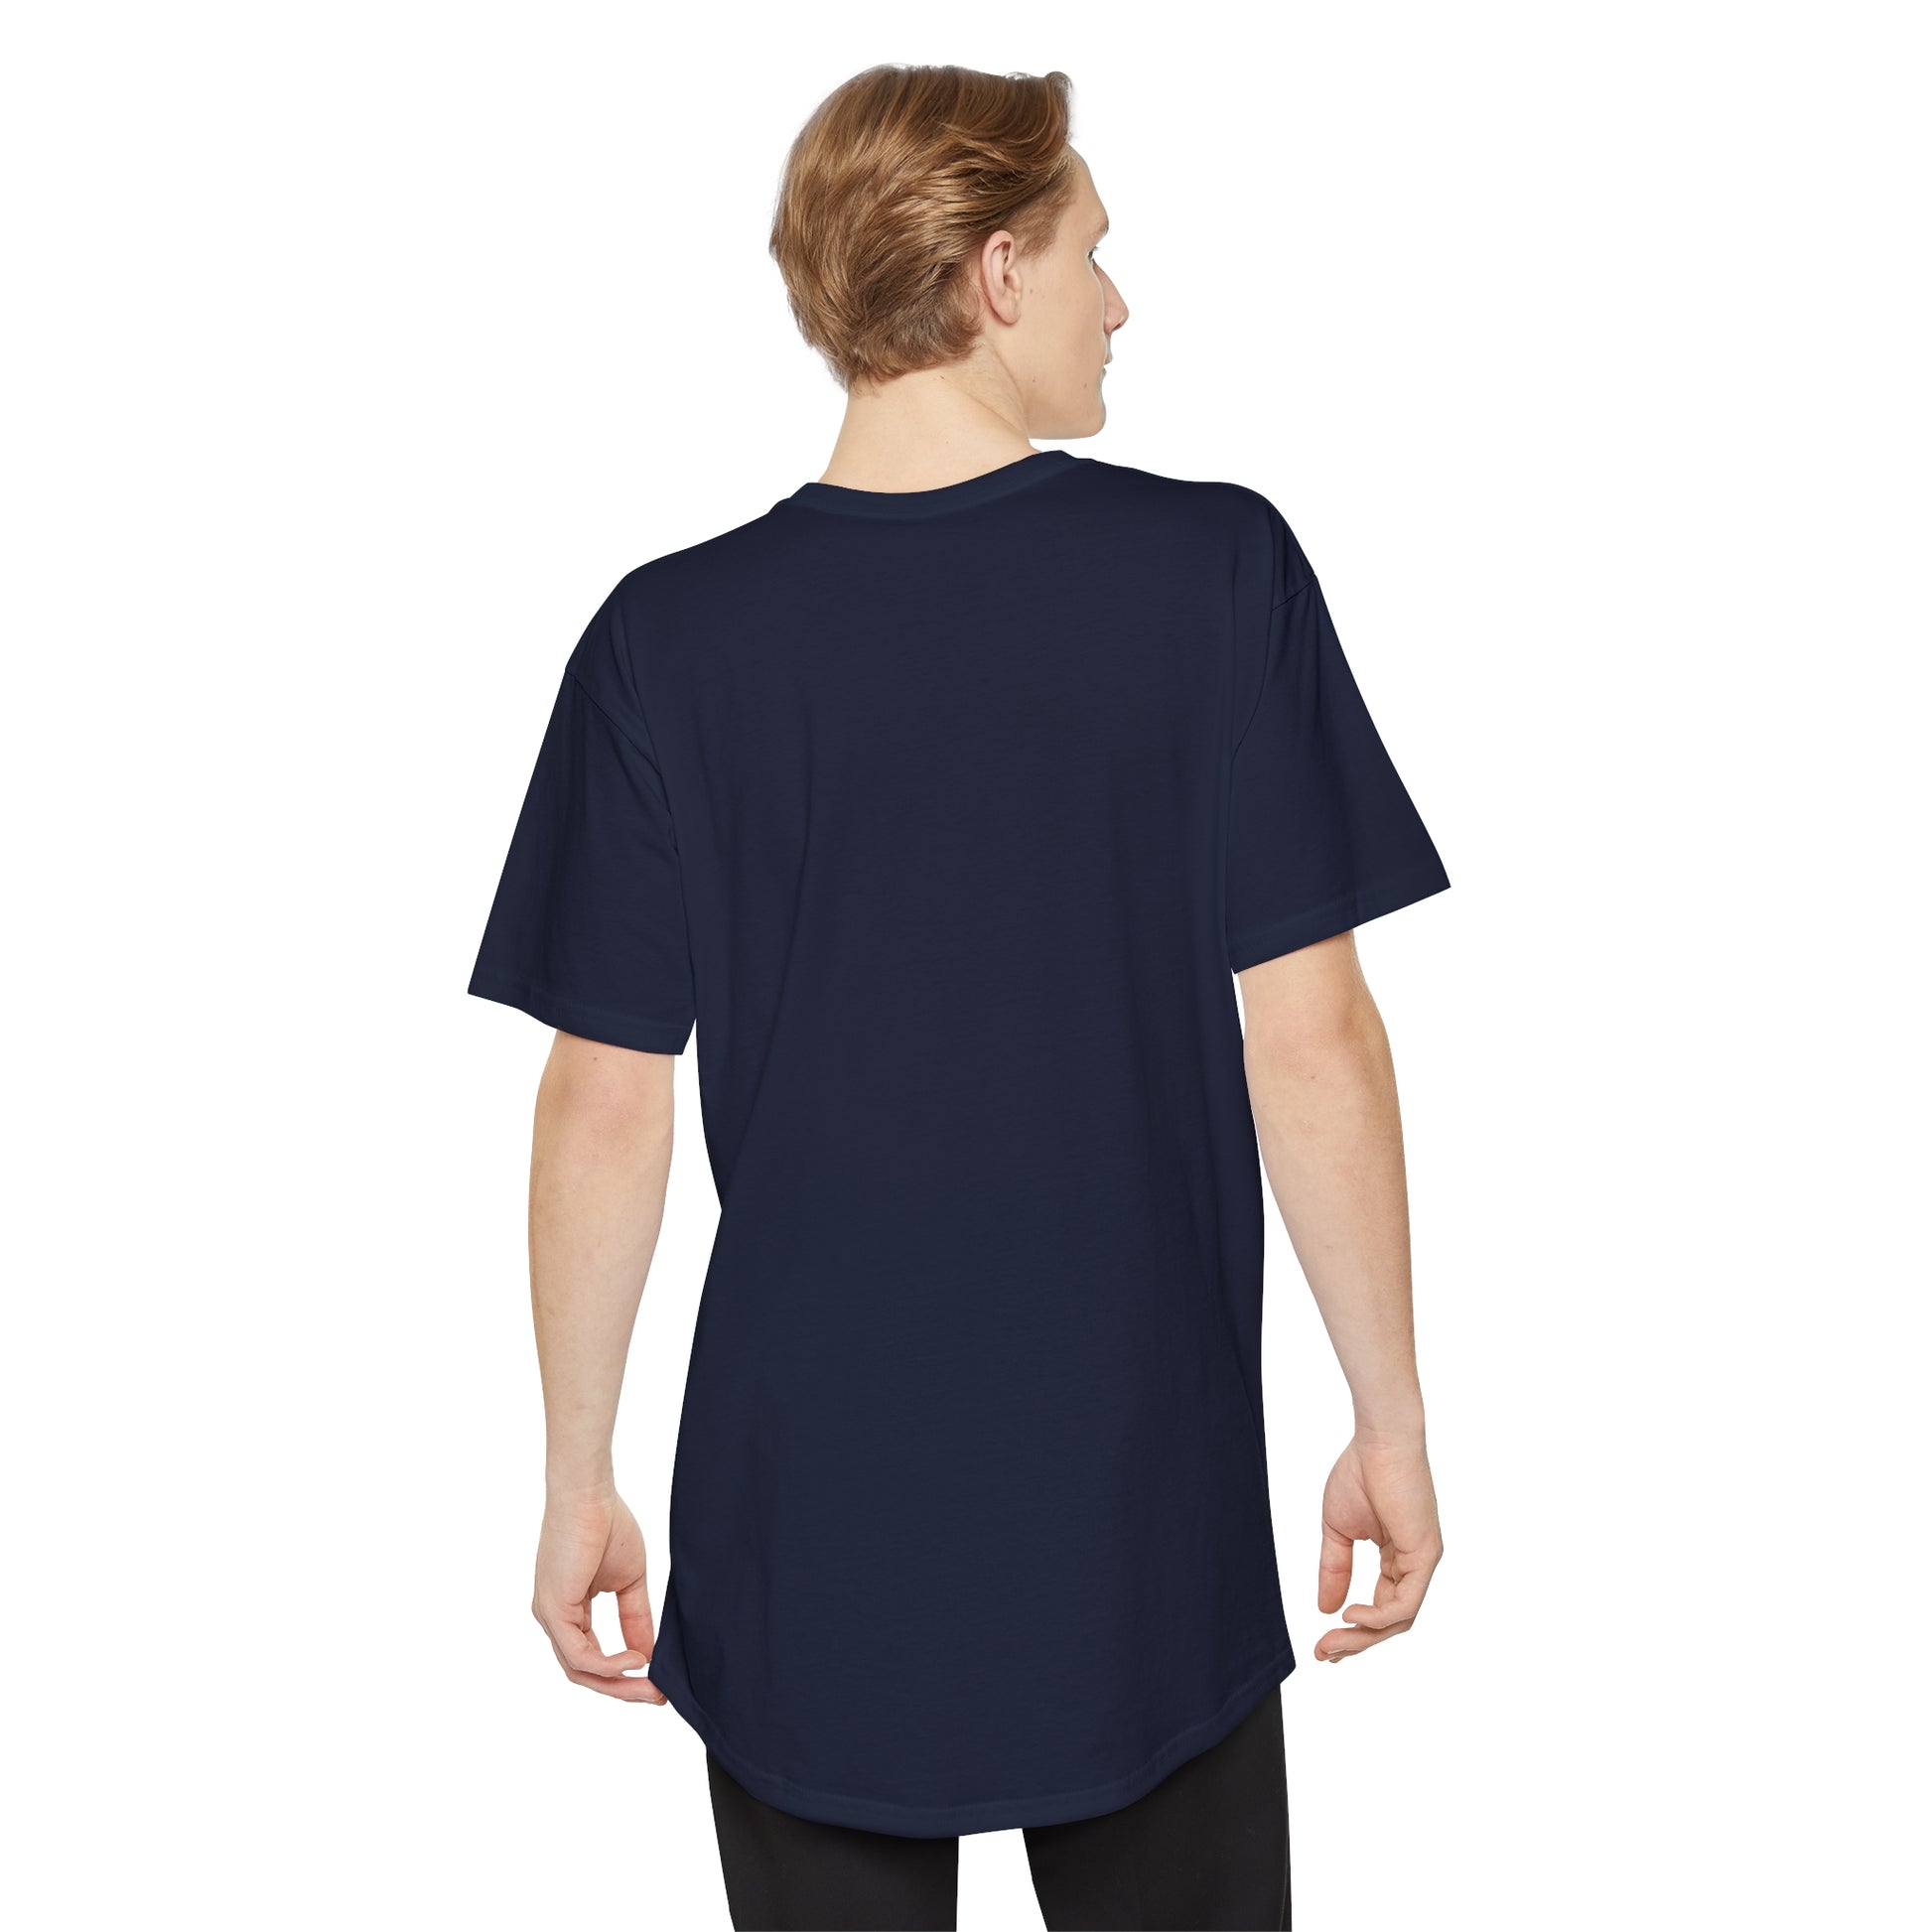 Q'il'bid Awe - Unisex Long Body Urban T-Shirt - Fry1Productions